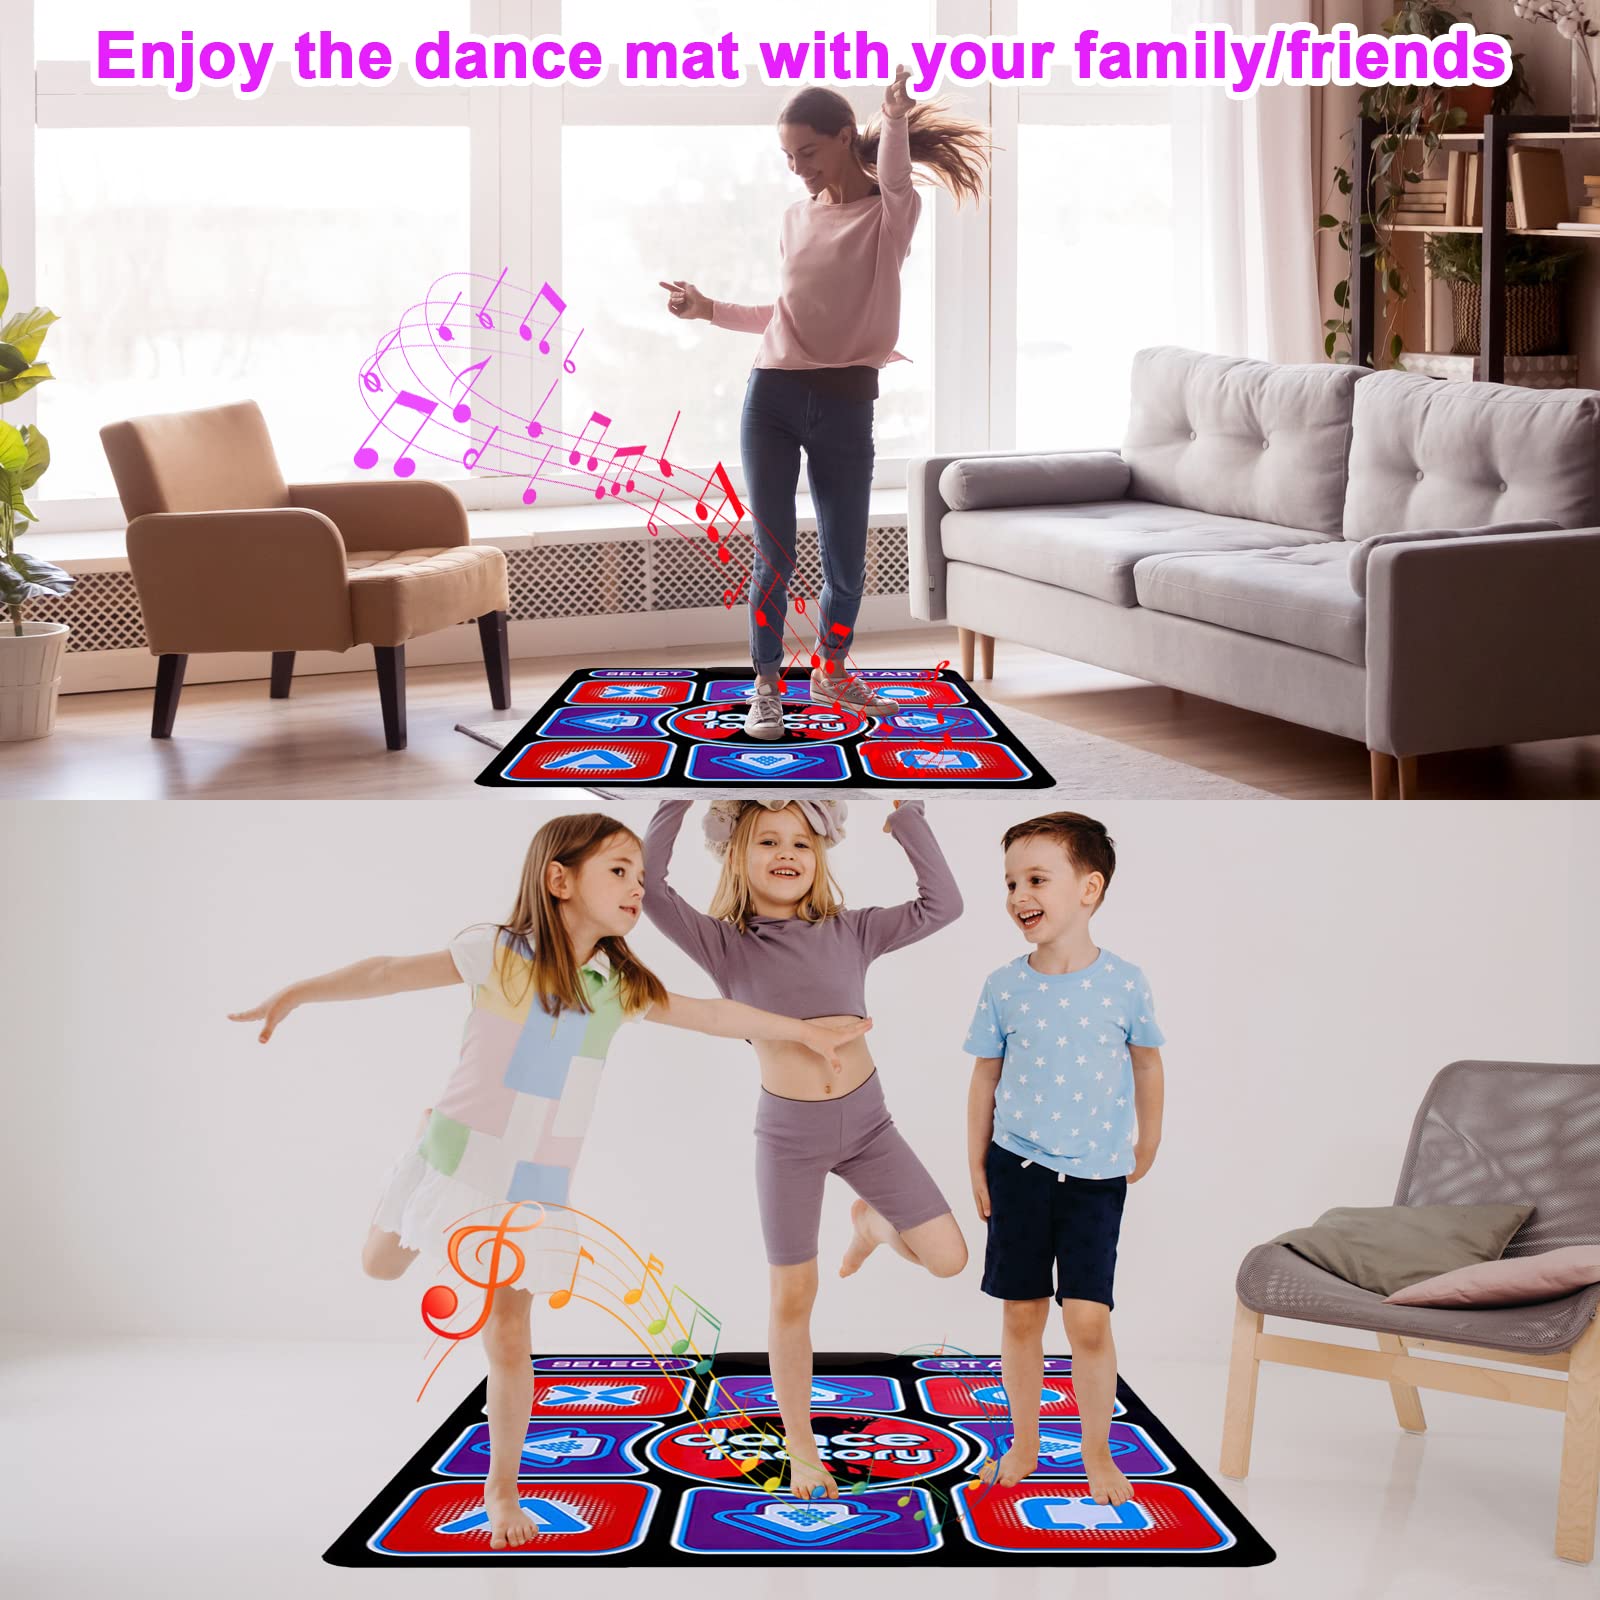 Dance Mat for Kids Adults,Musical Electronic Dance Mat,Yoga Fitness Dancing Step Floor Mat with 3D/Cartoon Mode,Non-Slip RCA Interface, 200 Songs & 68 Games